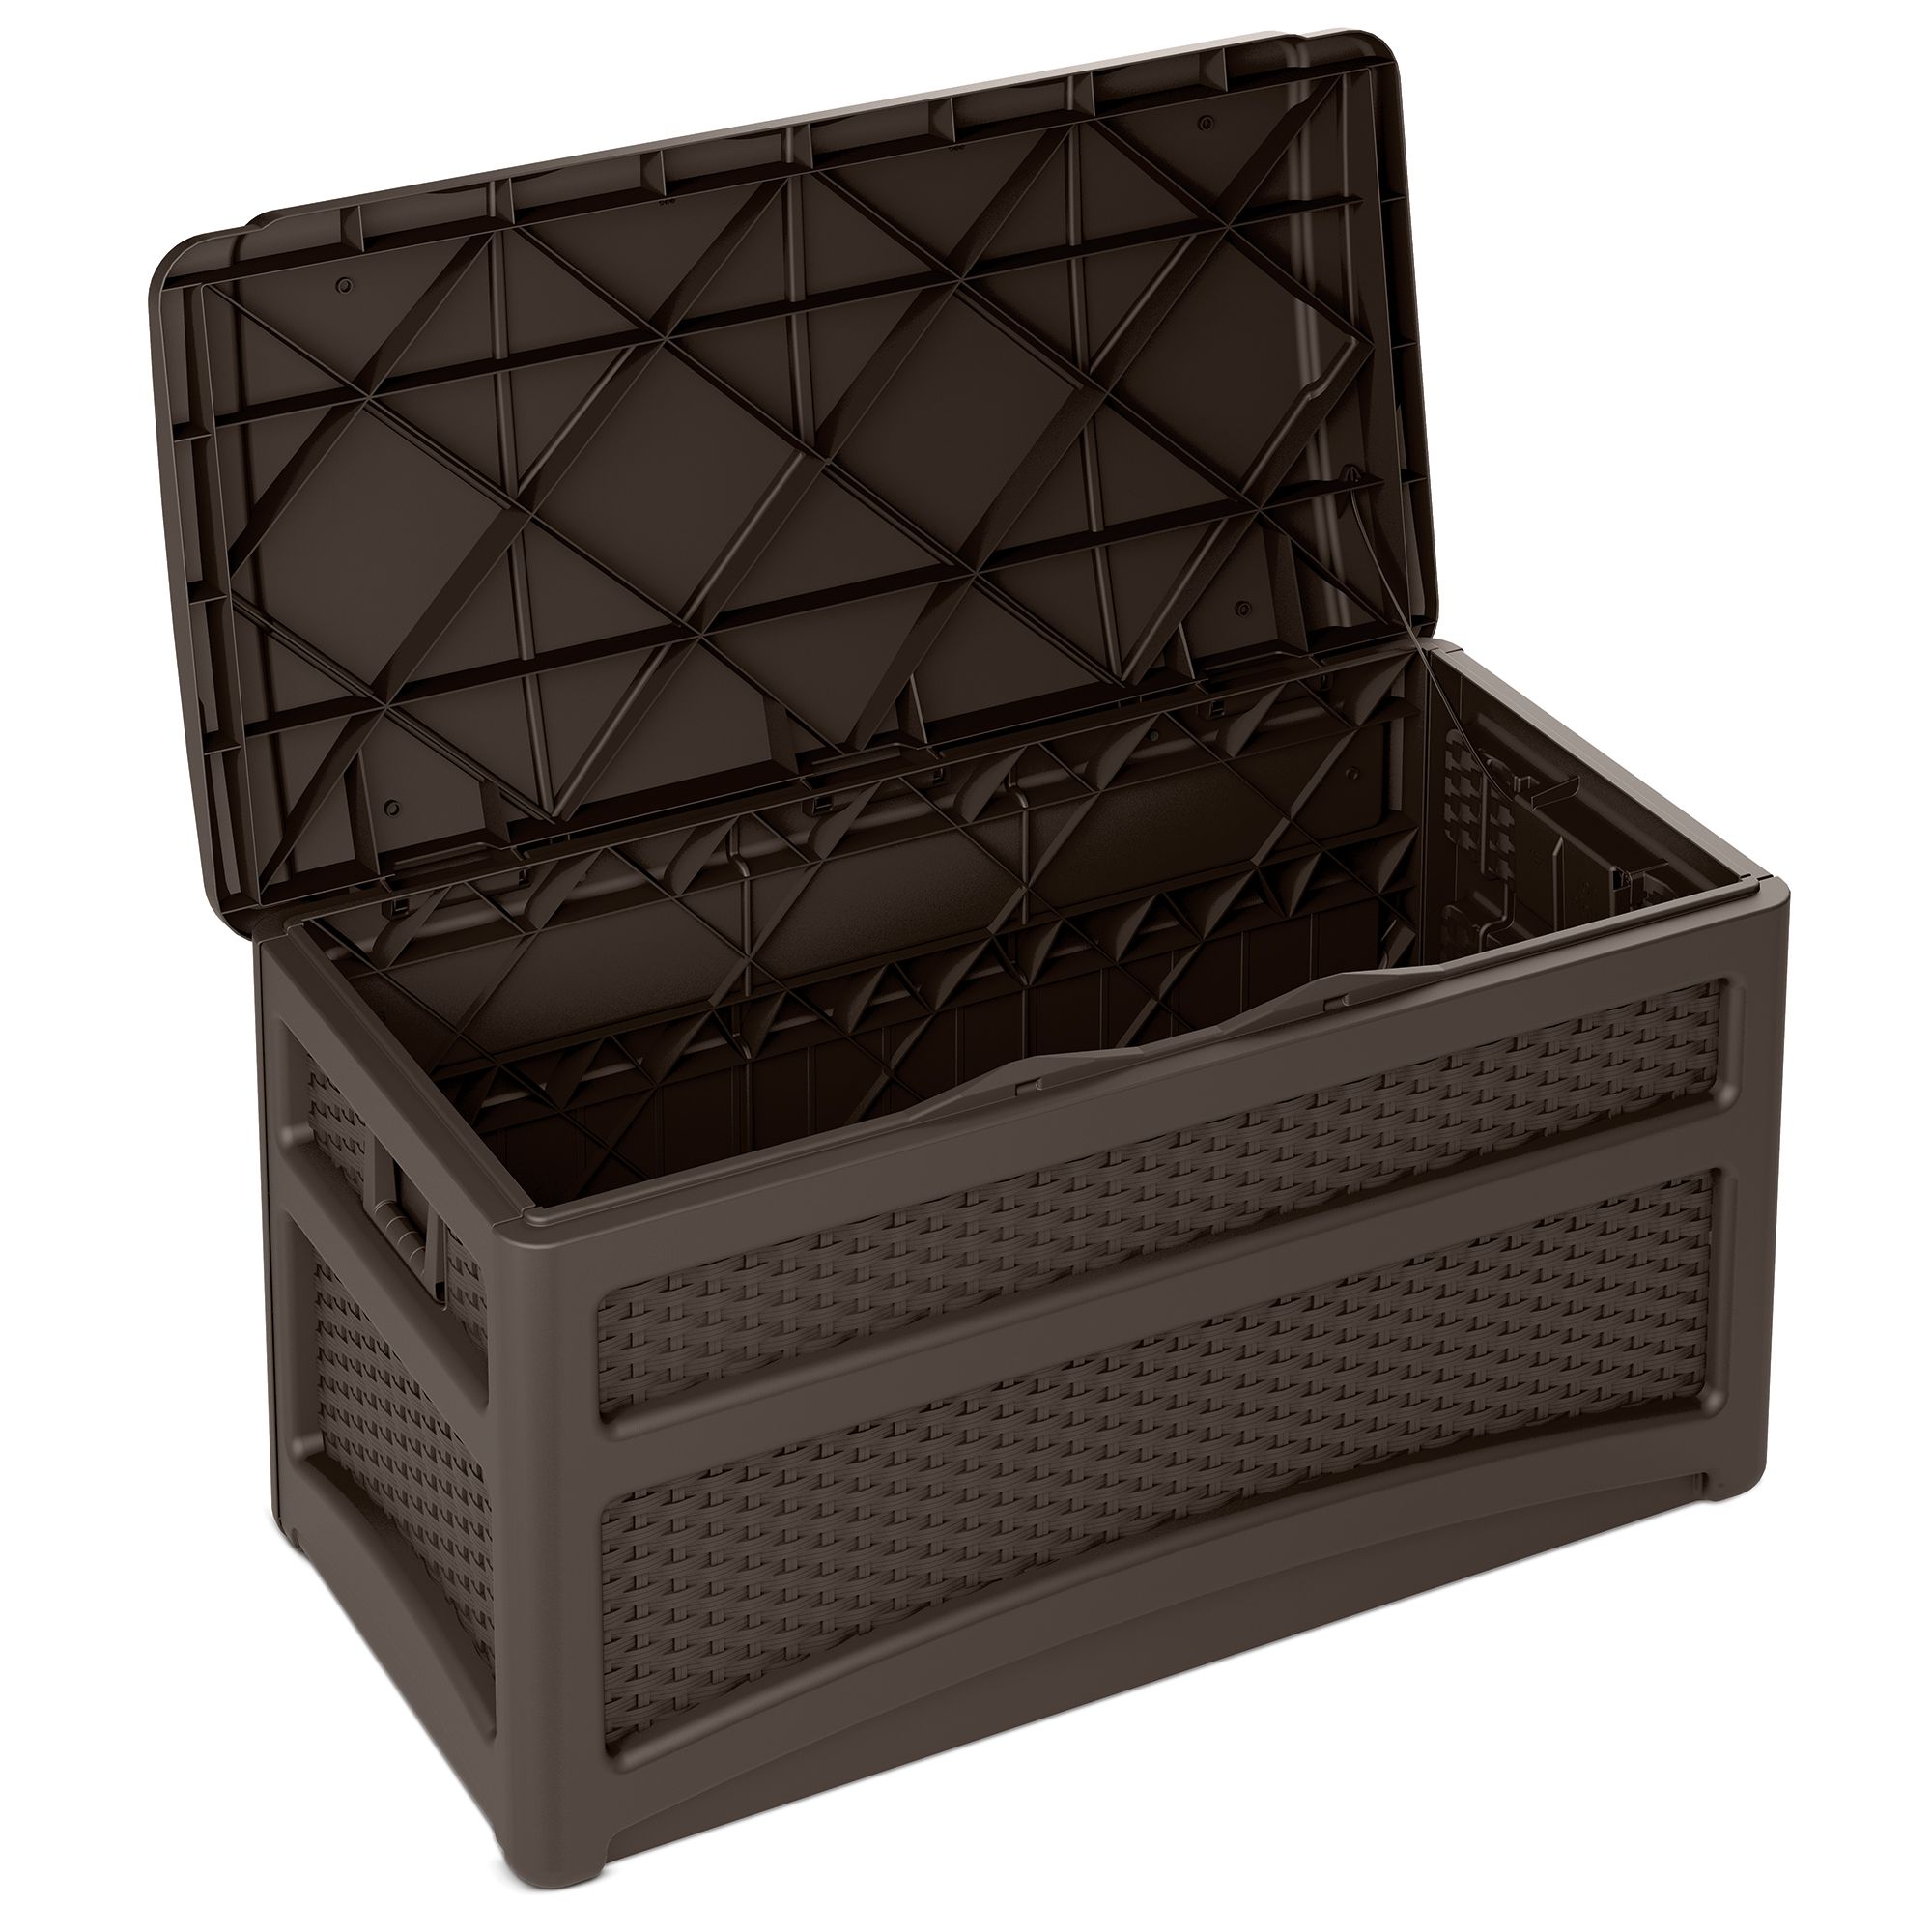 Suncast 73-Gal. Resin Wicker Deck Box with Wheels - Brown